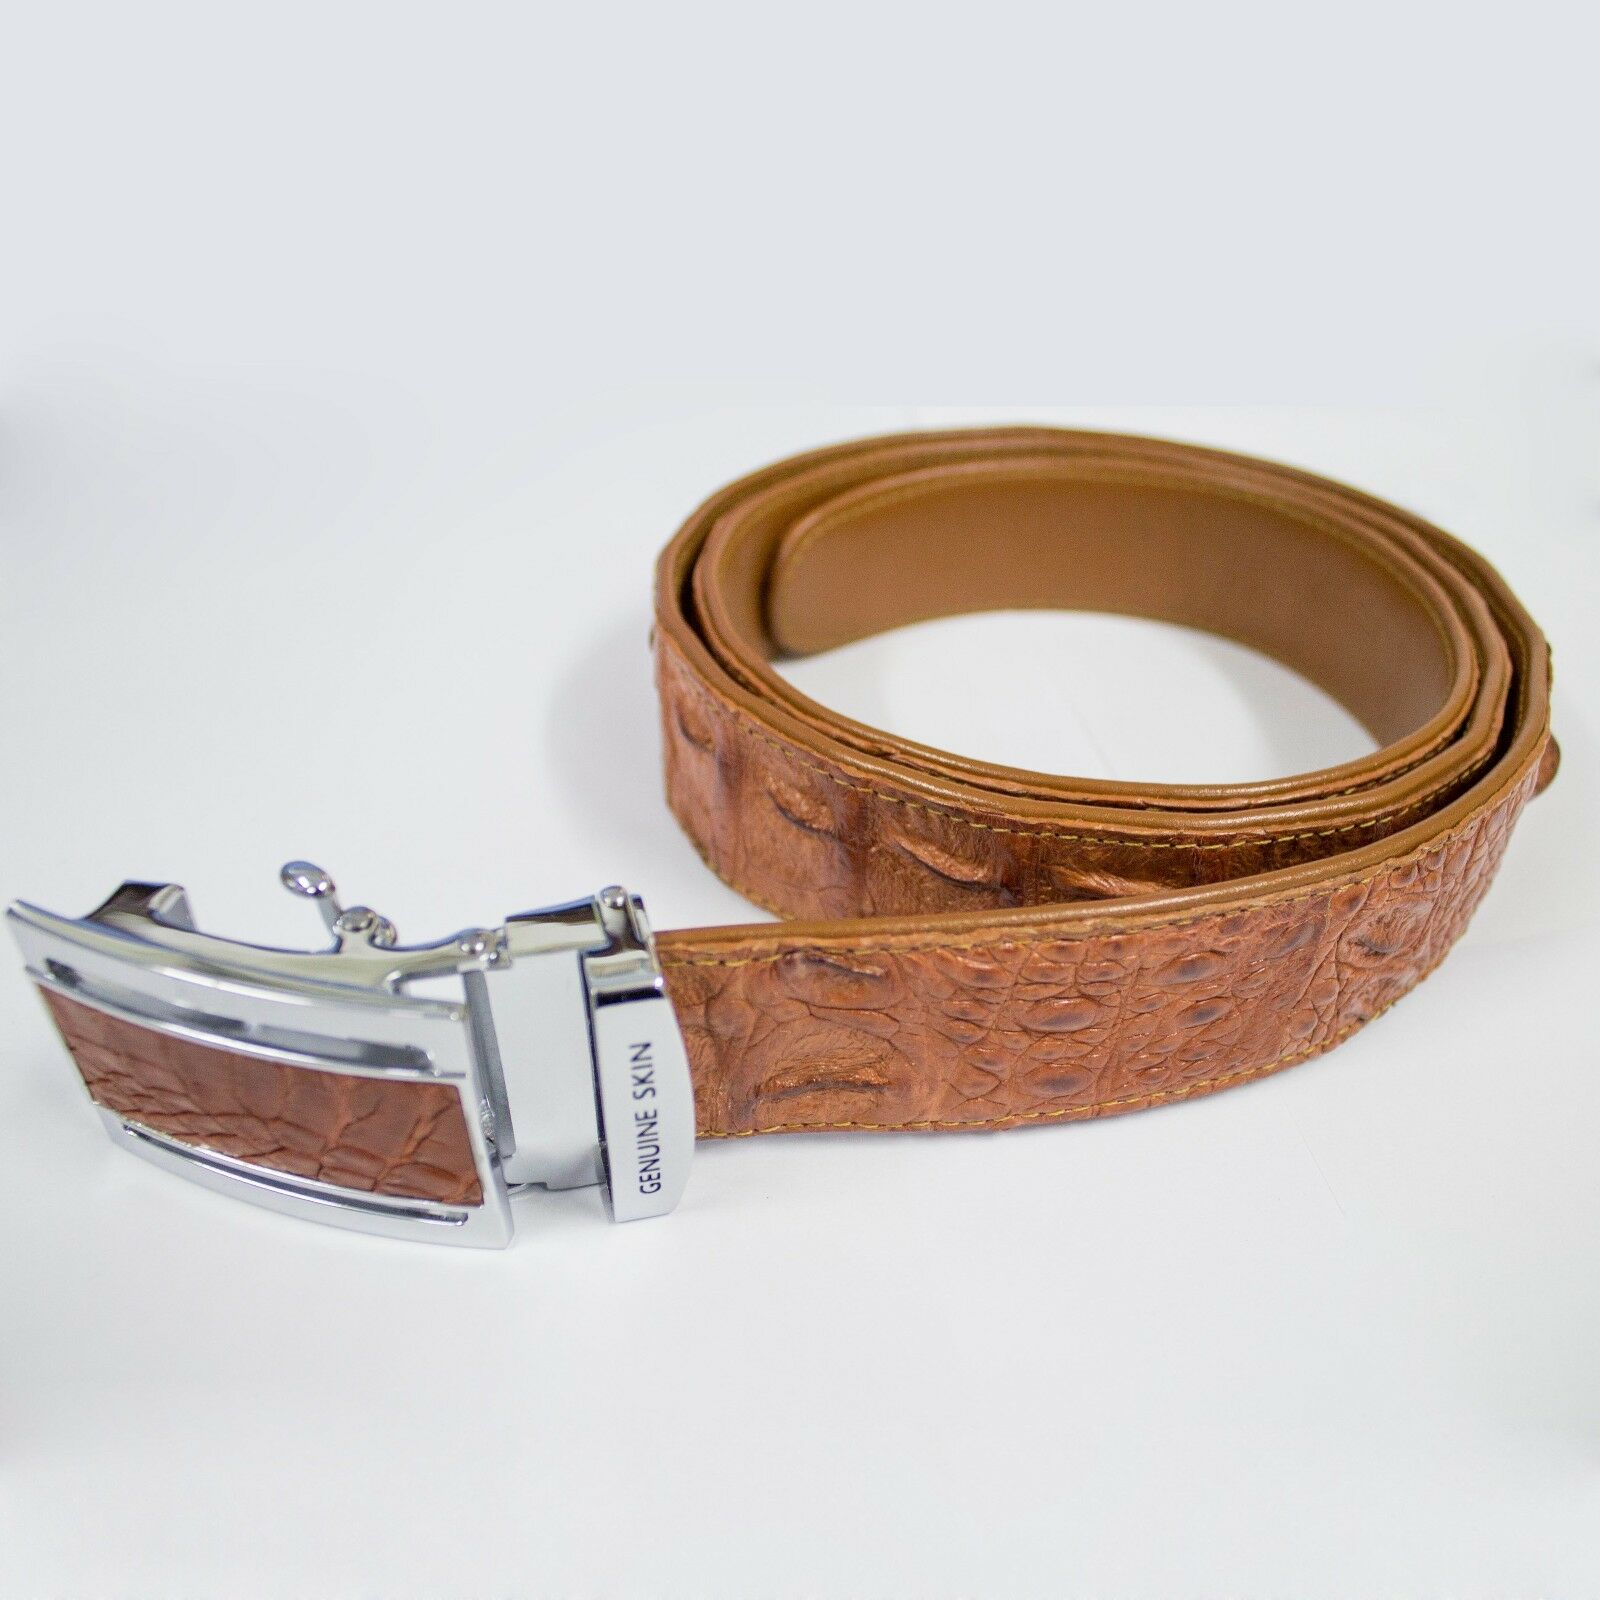 genuine hornback crocodile leather belt